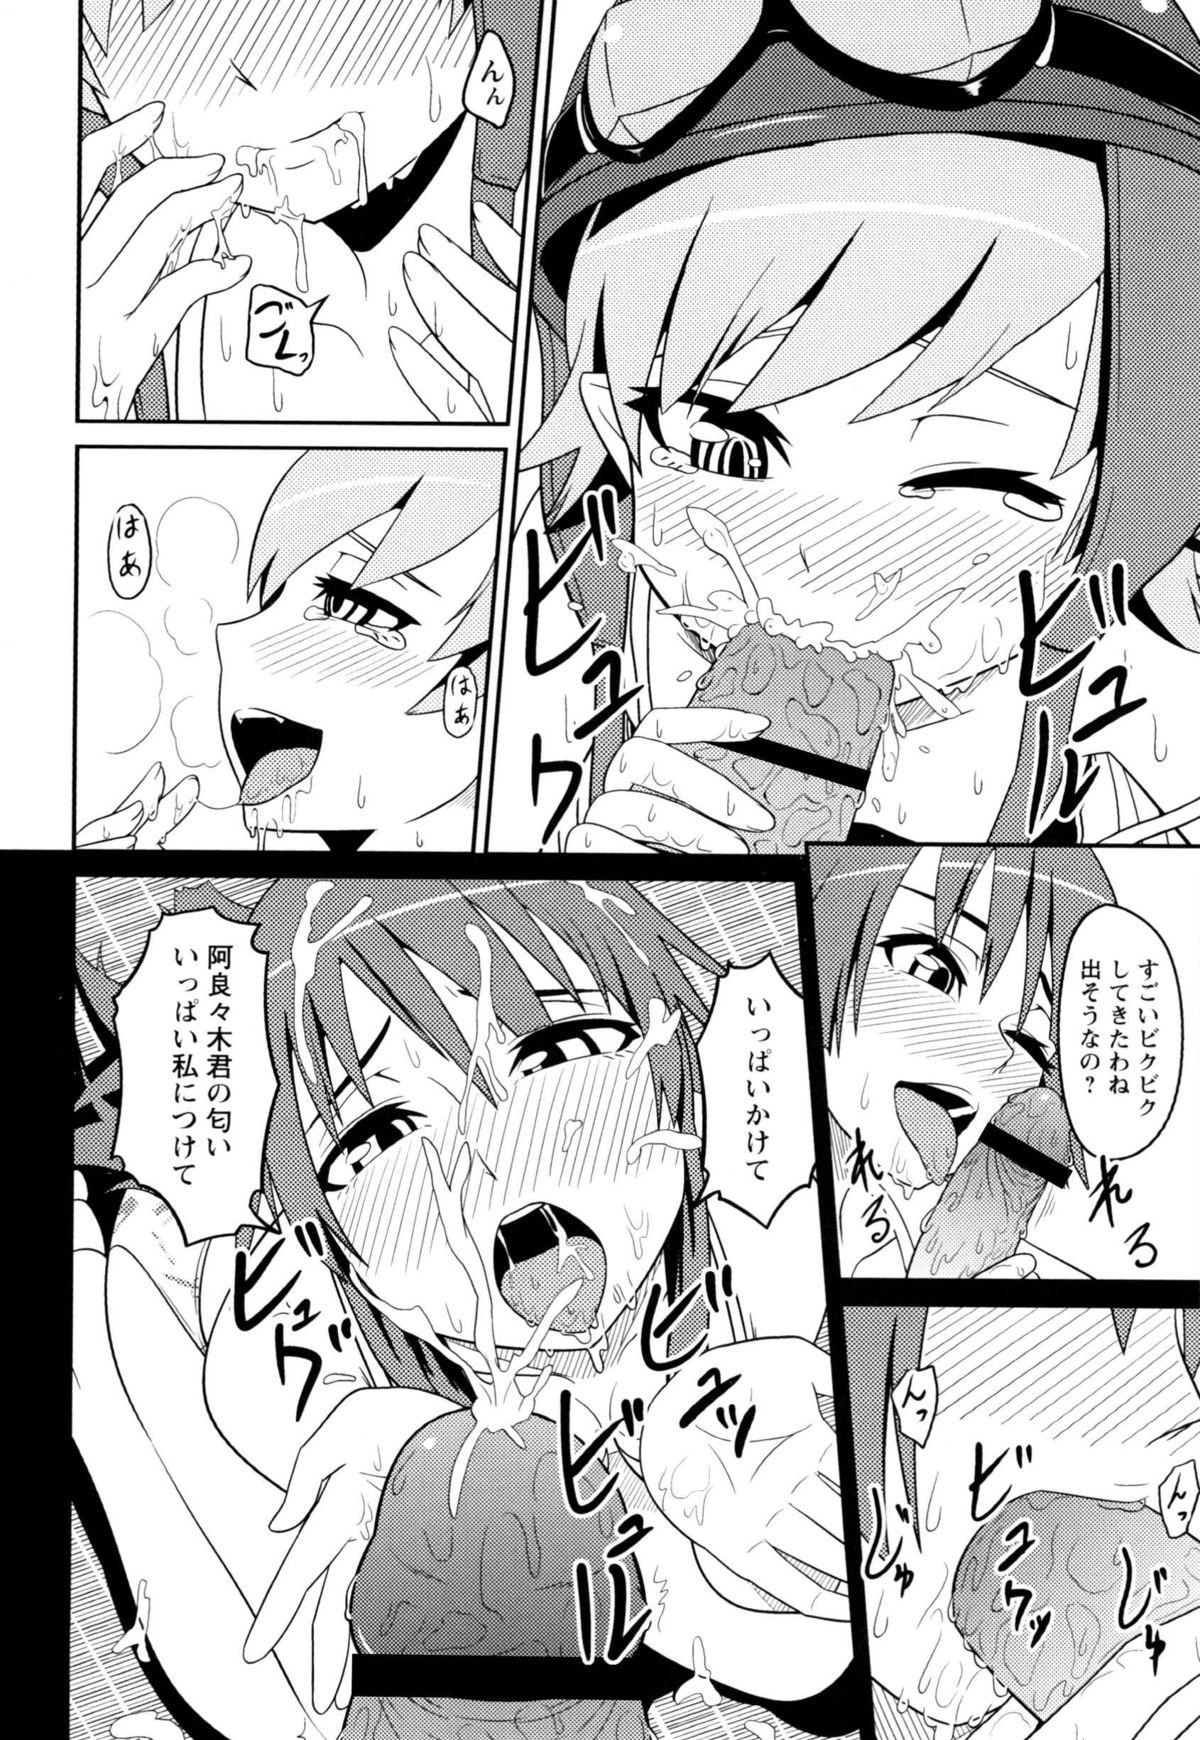 Gostoso Dream of one day - Bakemonogatari Teenage Sex - Page 8